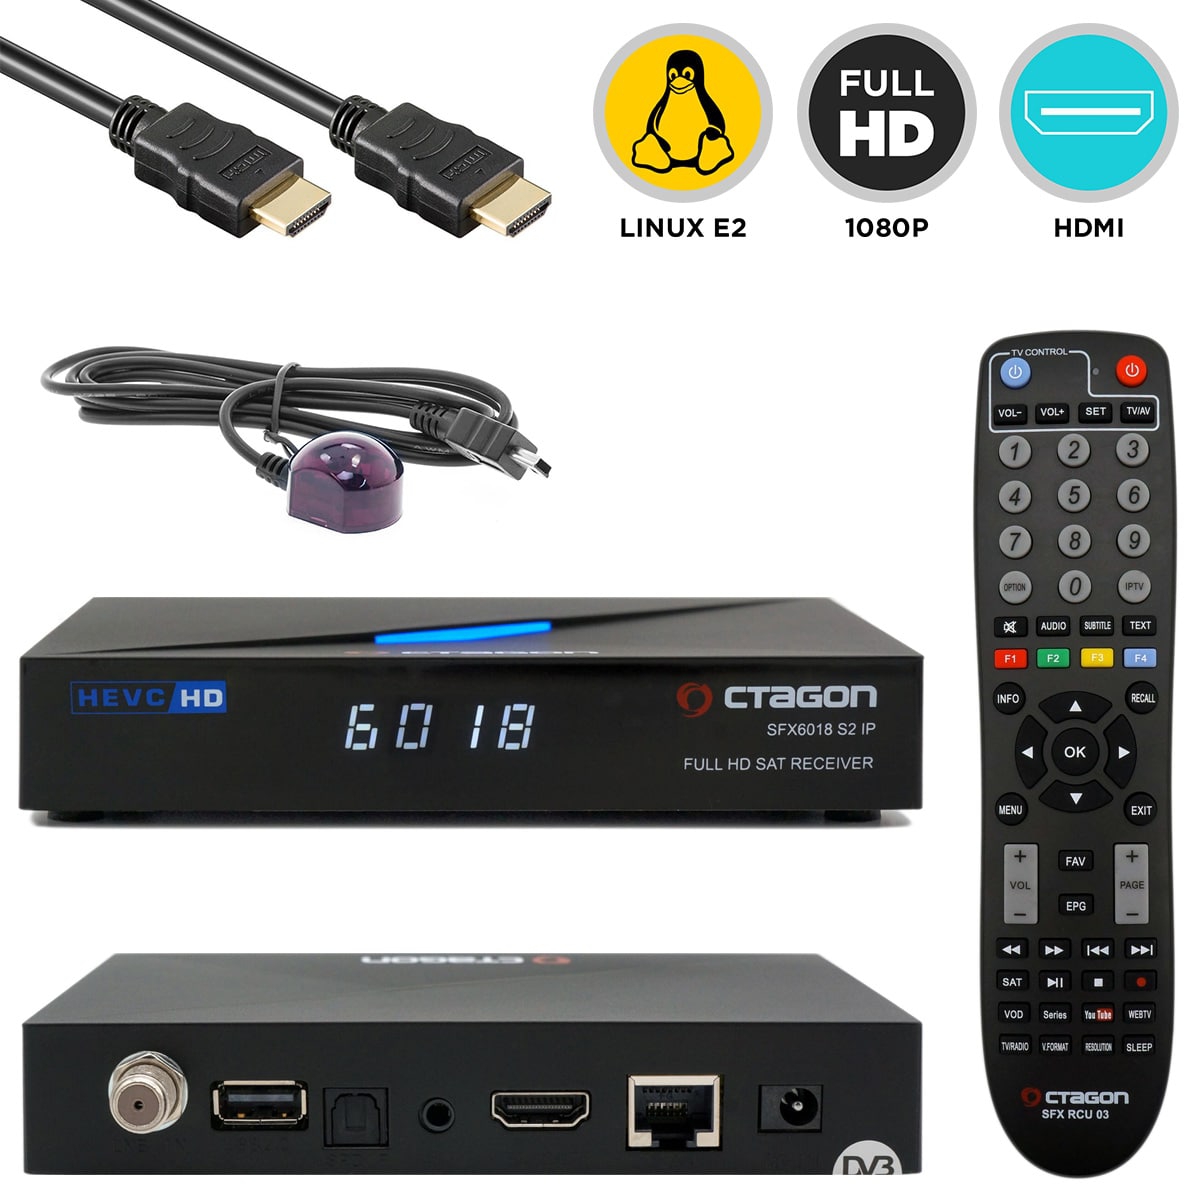 Octagon SFX6018 S2+IP Full HD Sat IP-Receiver (Linux E2 & Define OS, DVB-S2, 1080p, HDMI, USB, LAN)